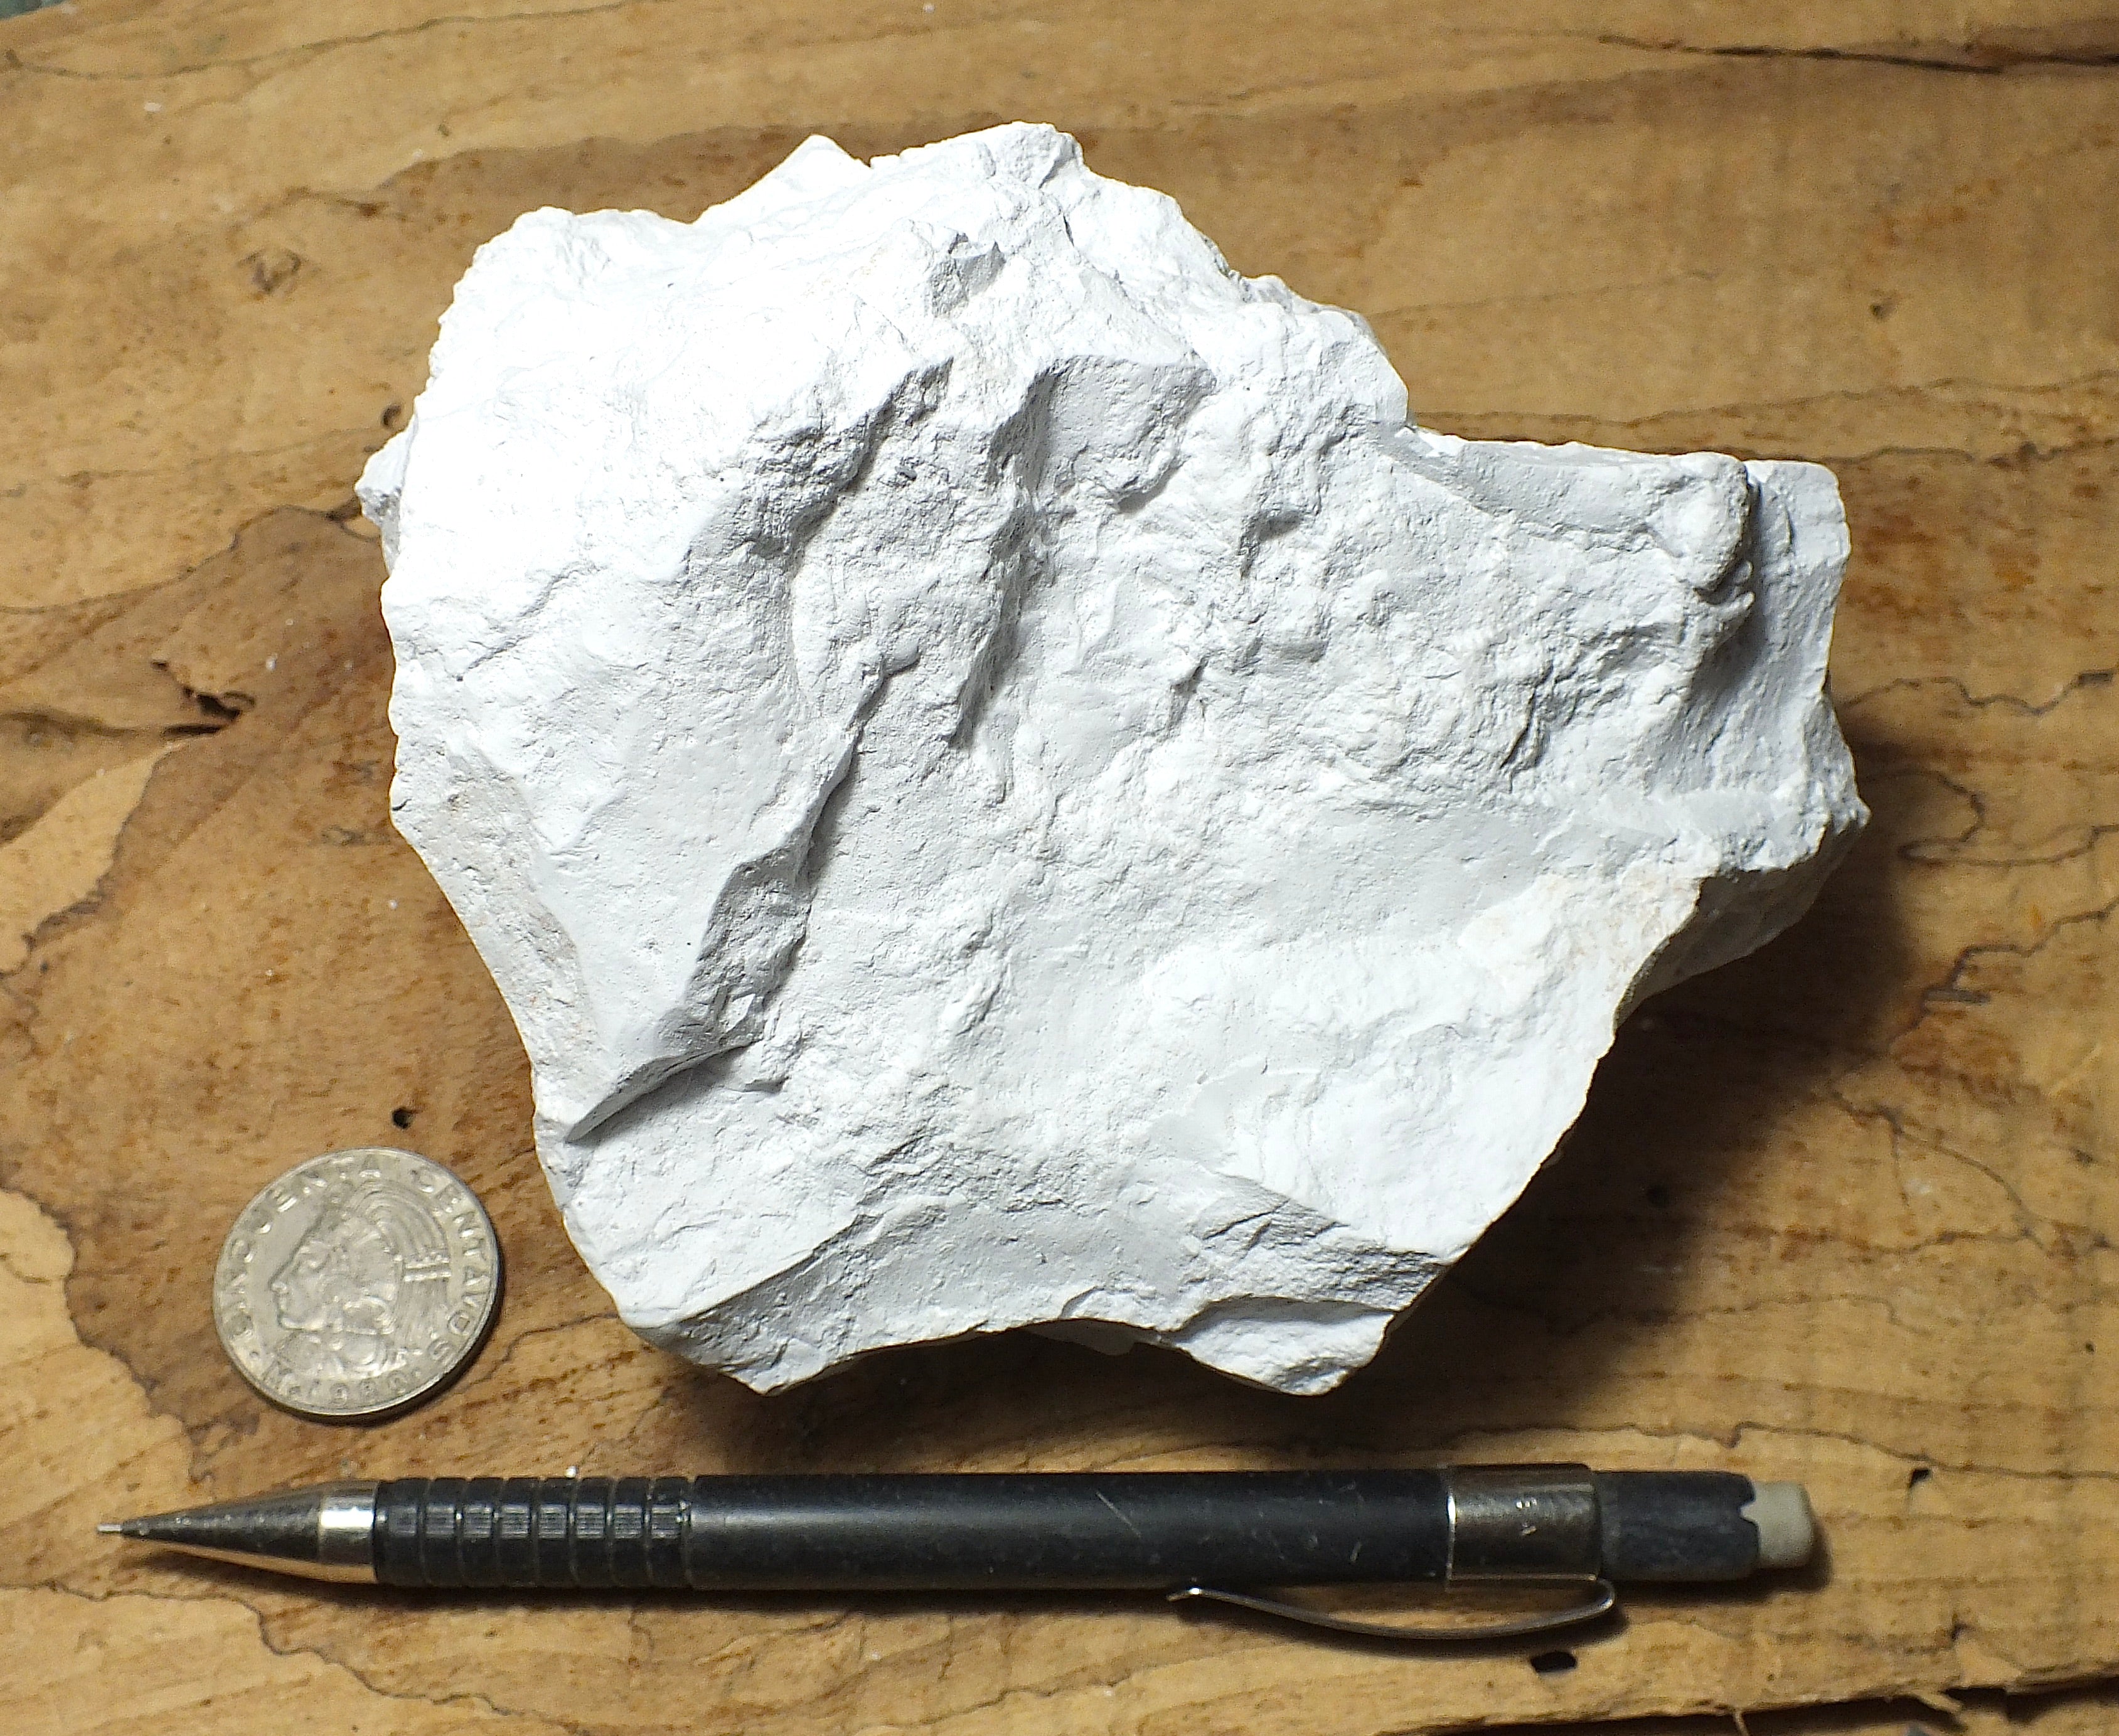 kaolinite - soft white kaolin - display specimen of the primary